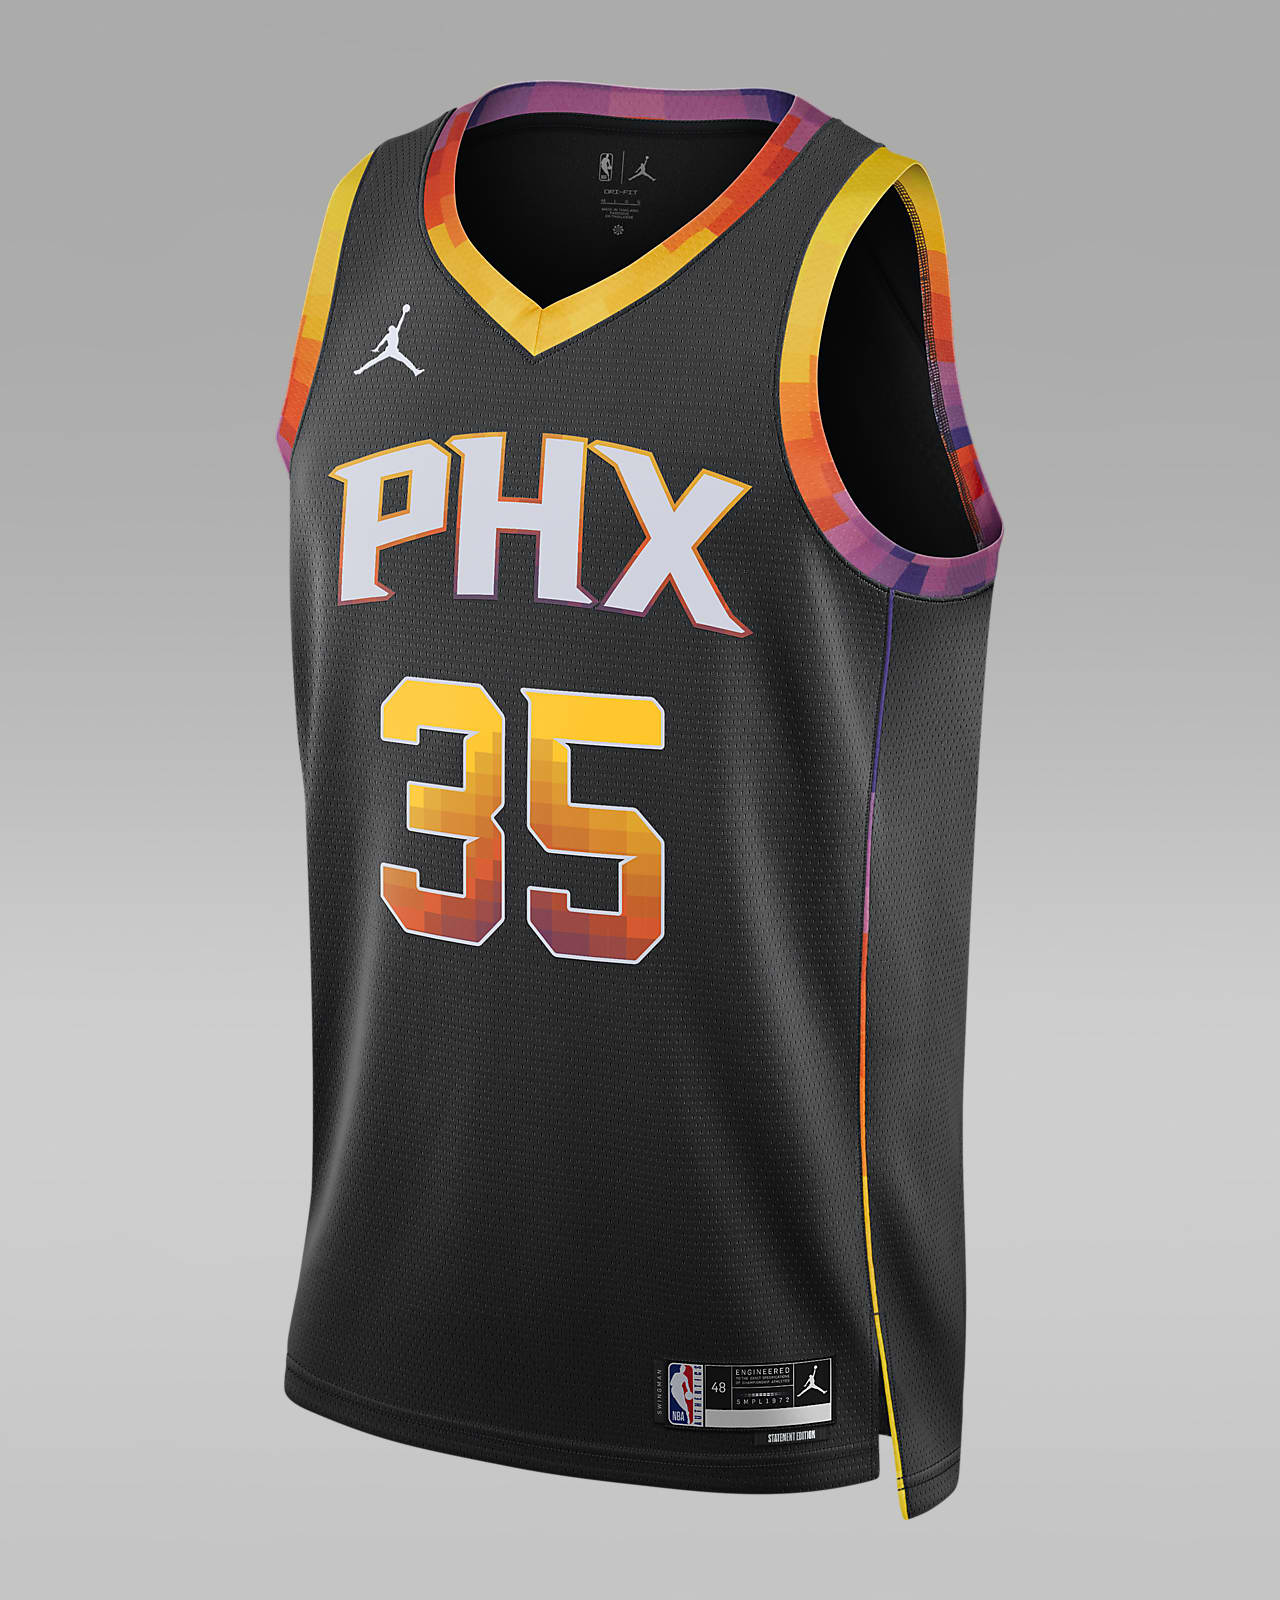 Phoenix Suns Statement Edition Men's Jordan Dri-FIT NBA Swingman Jersey